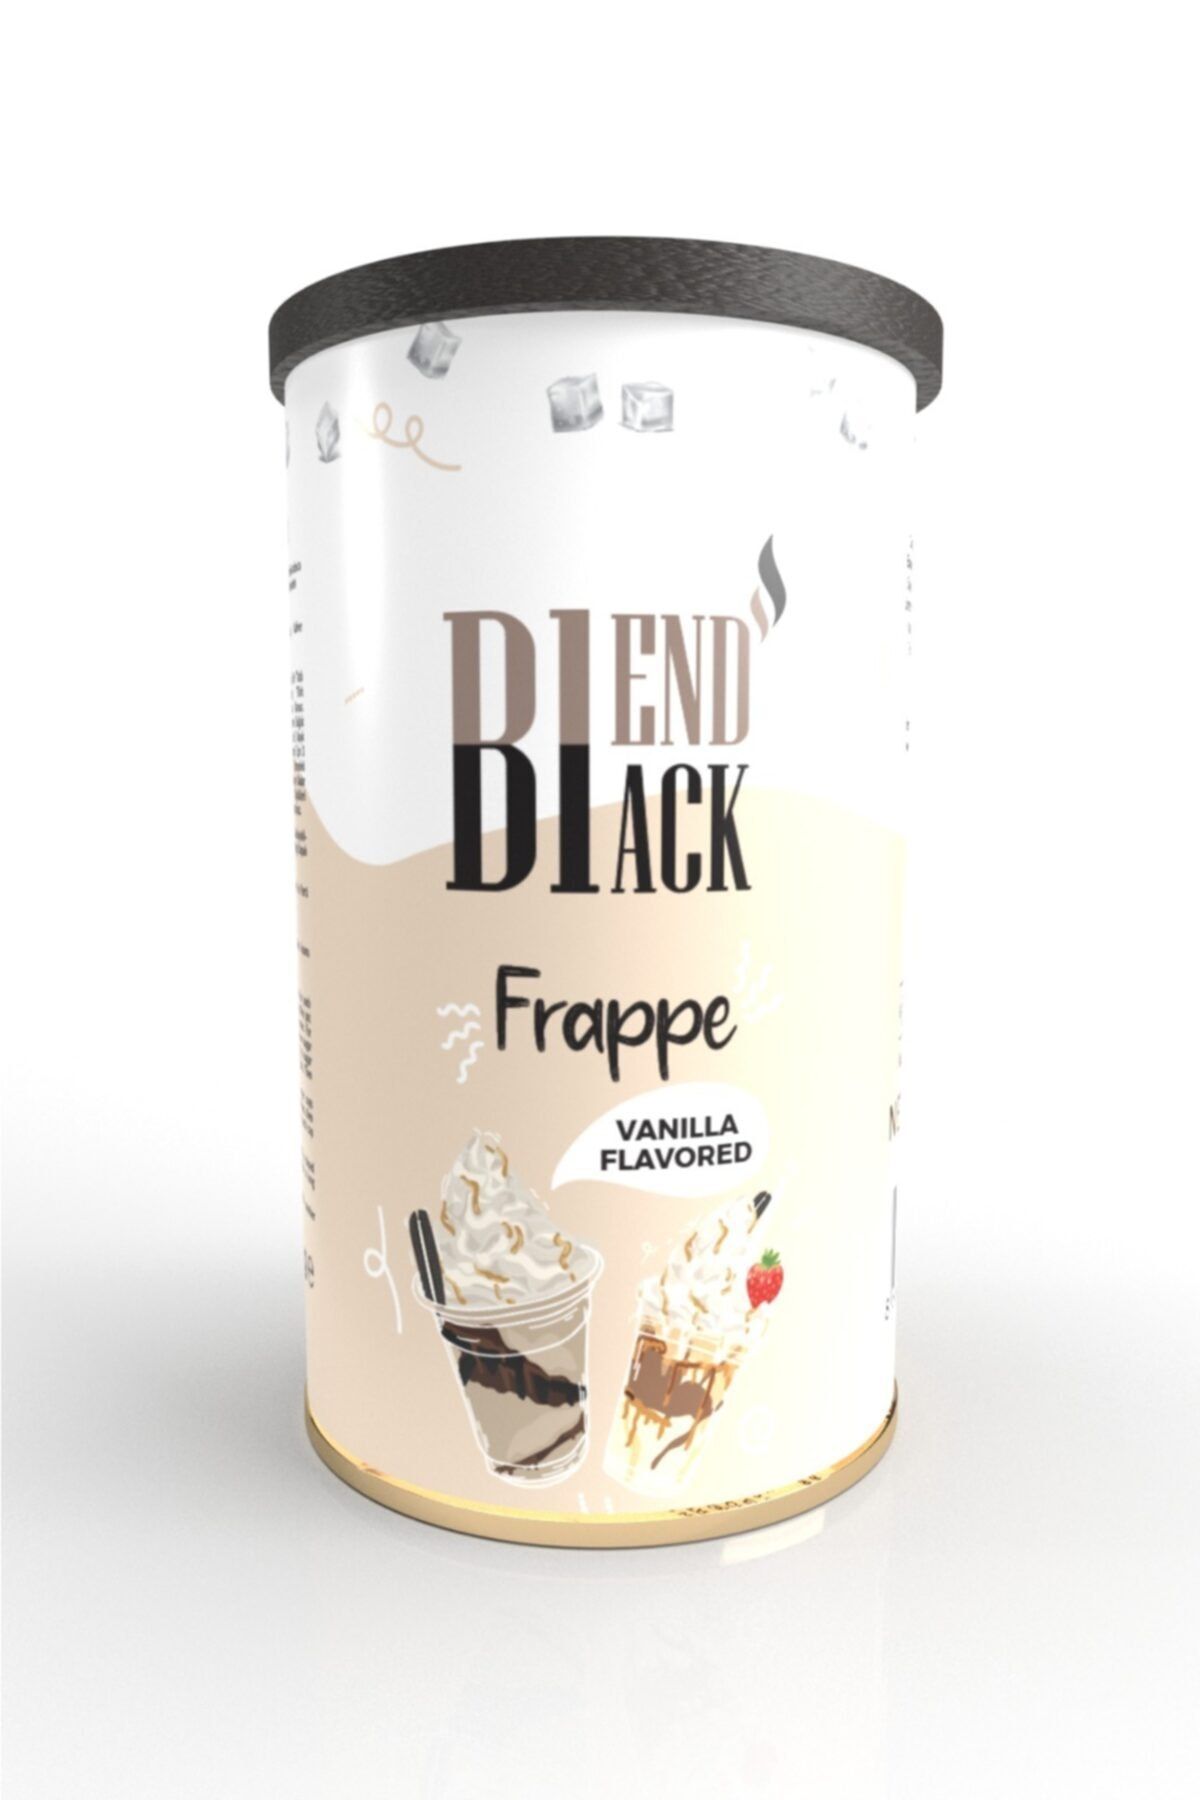 Blendblack Frappe Vanilla Flavored Aromalı 500gr Teneke Kutu